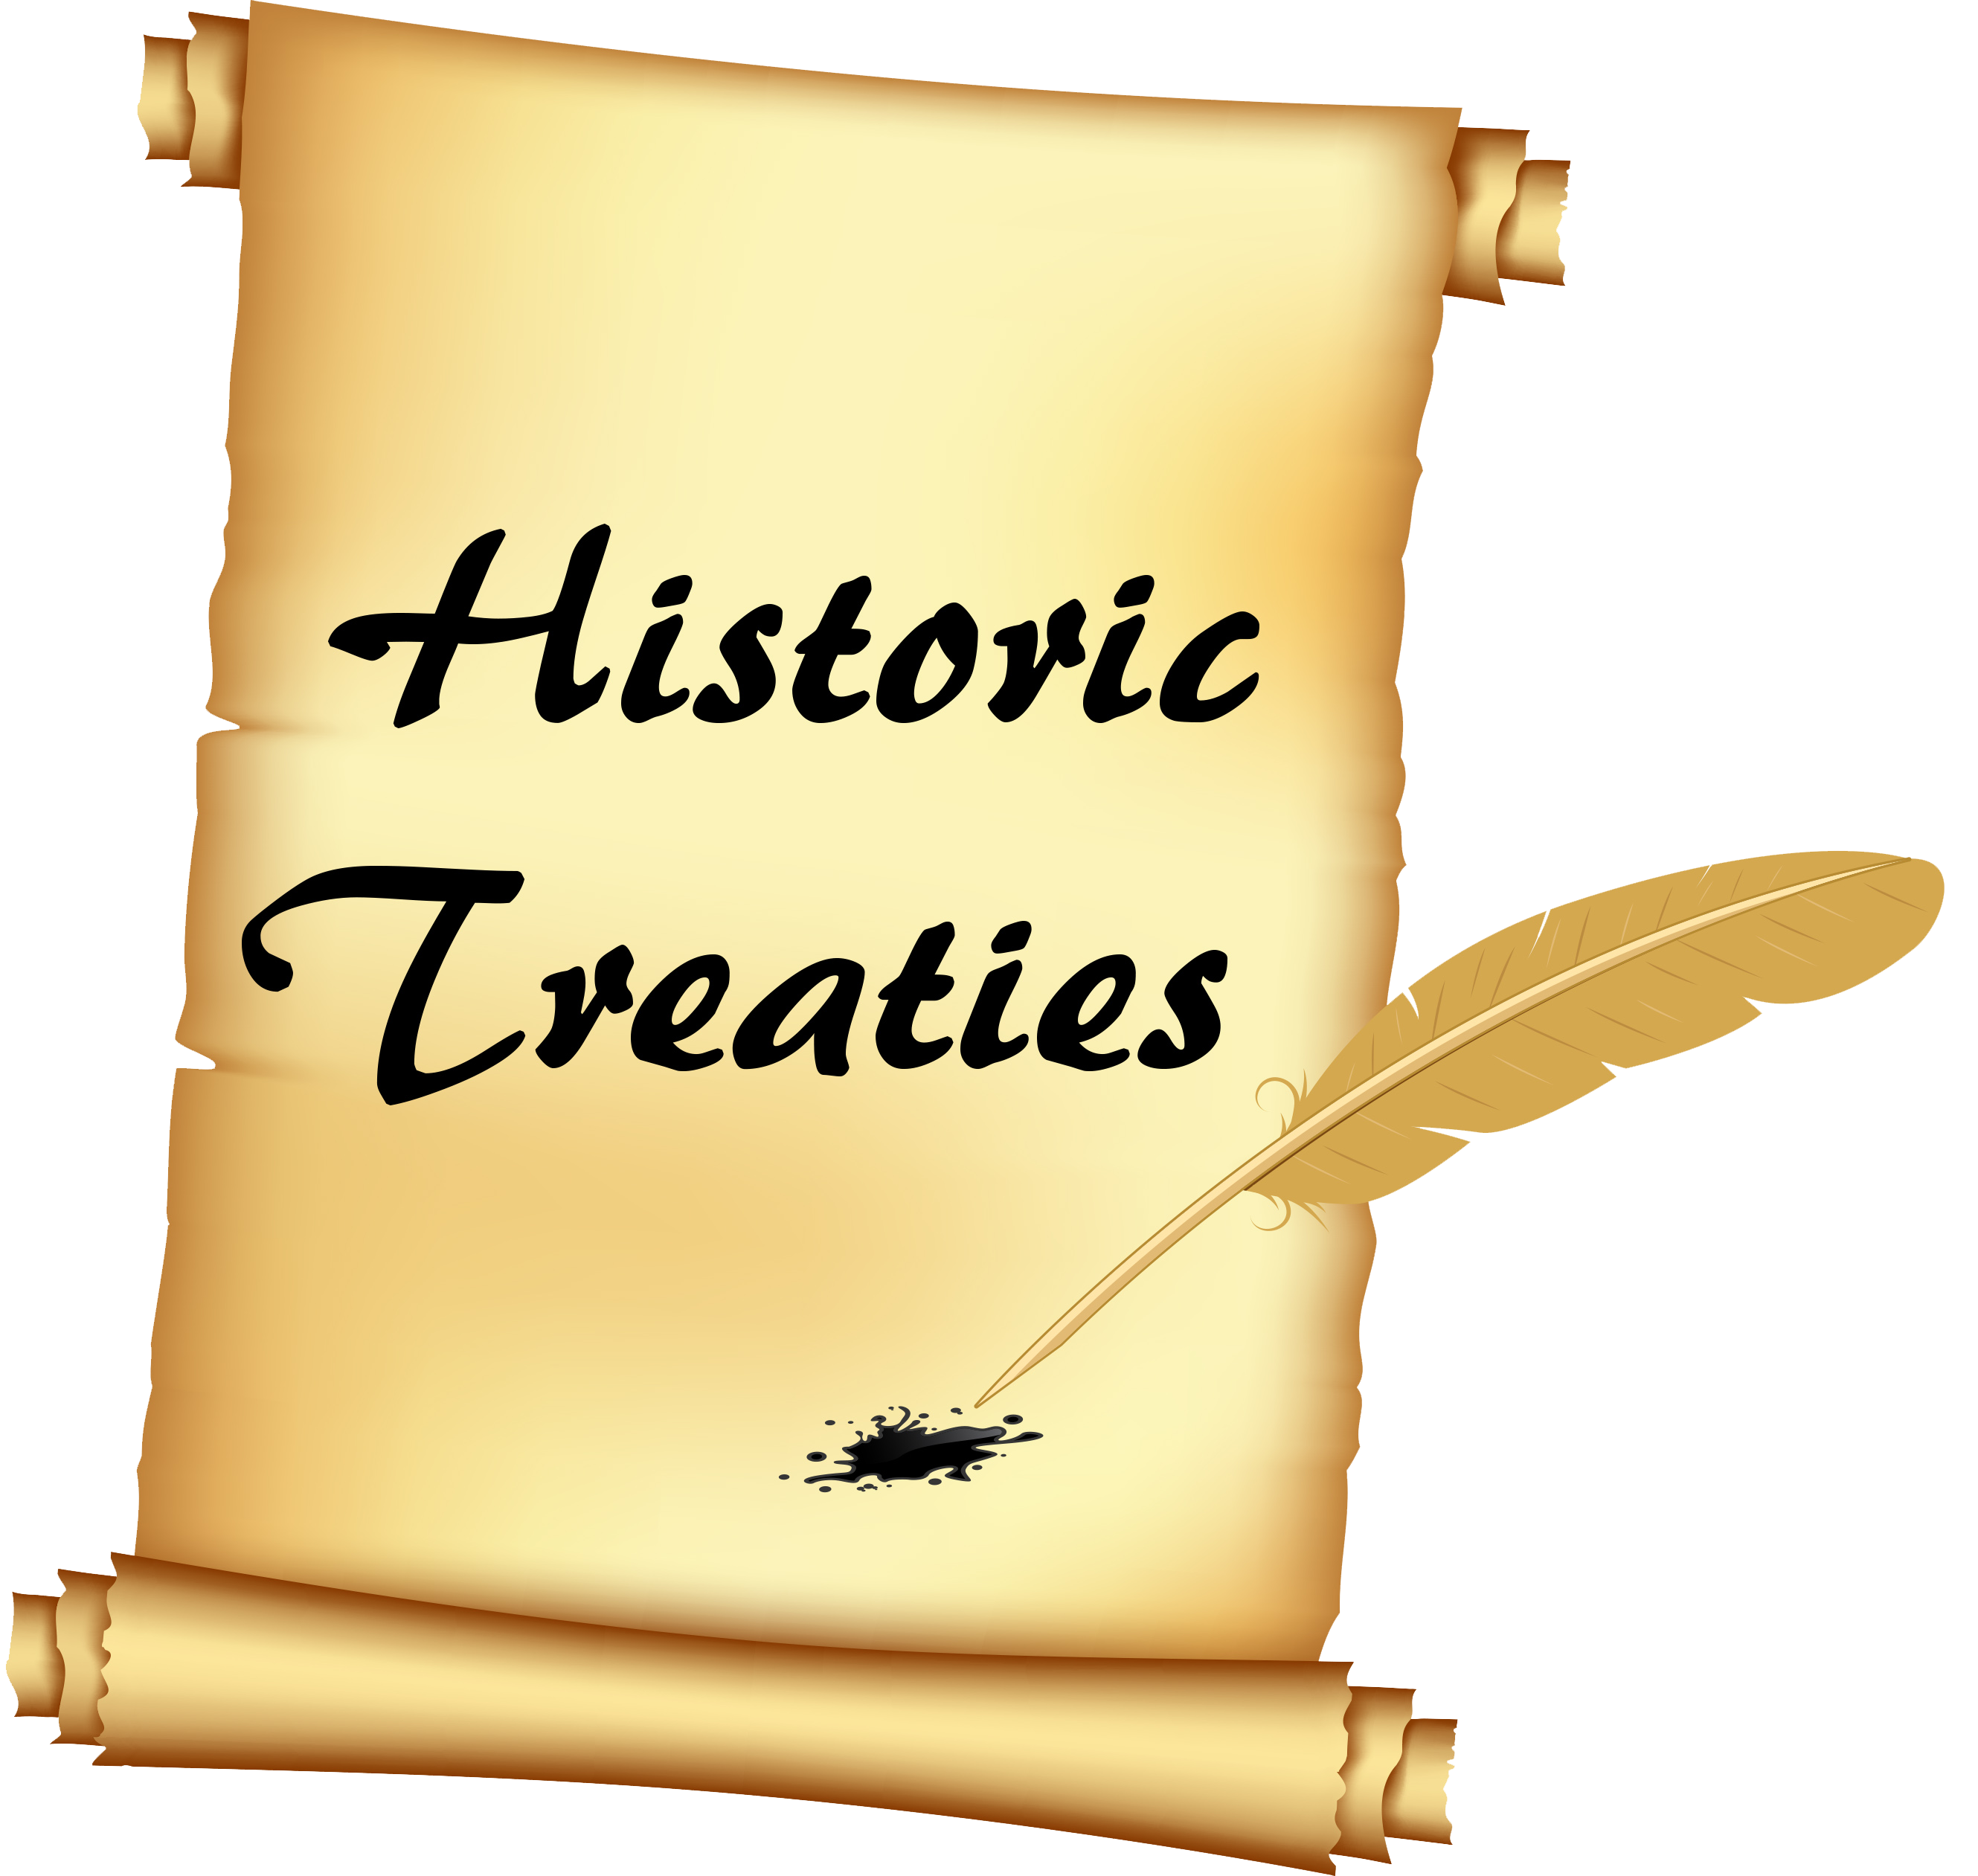 Historic Treaties